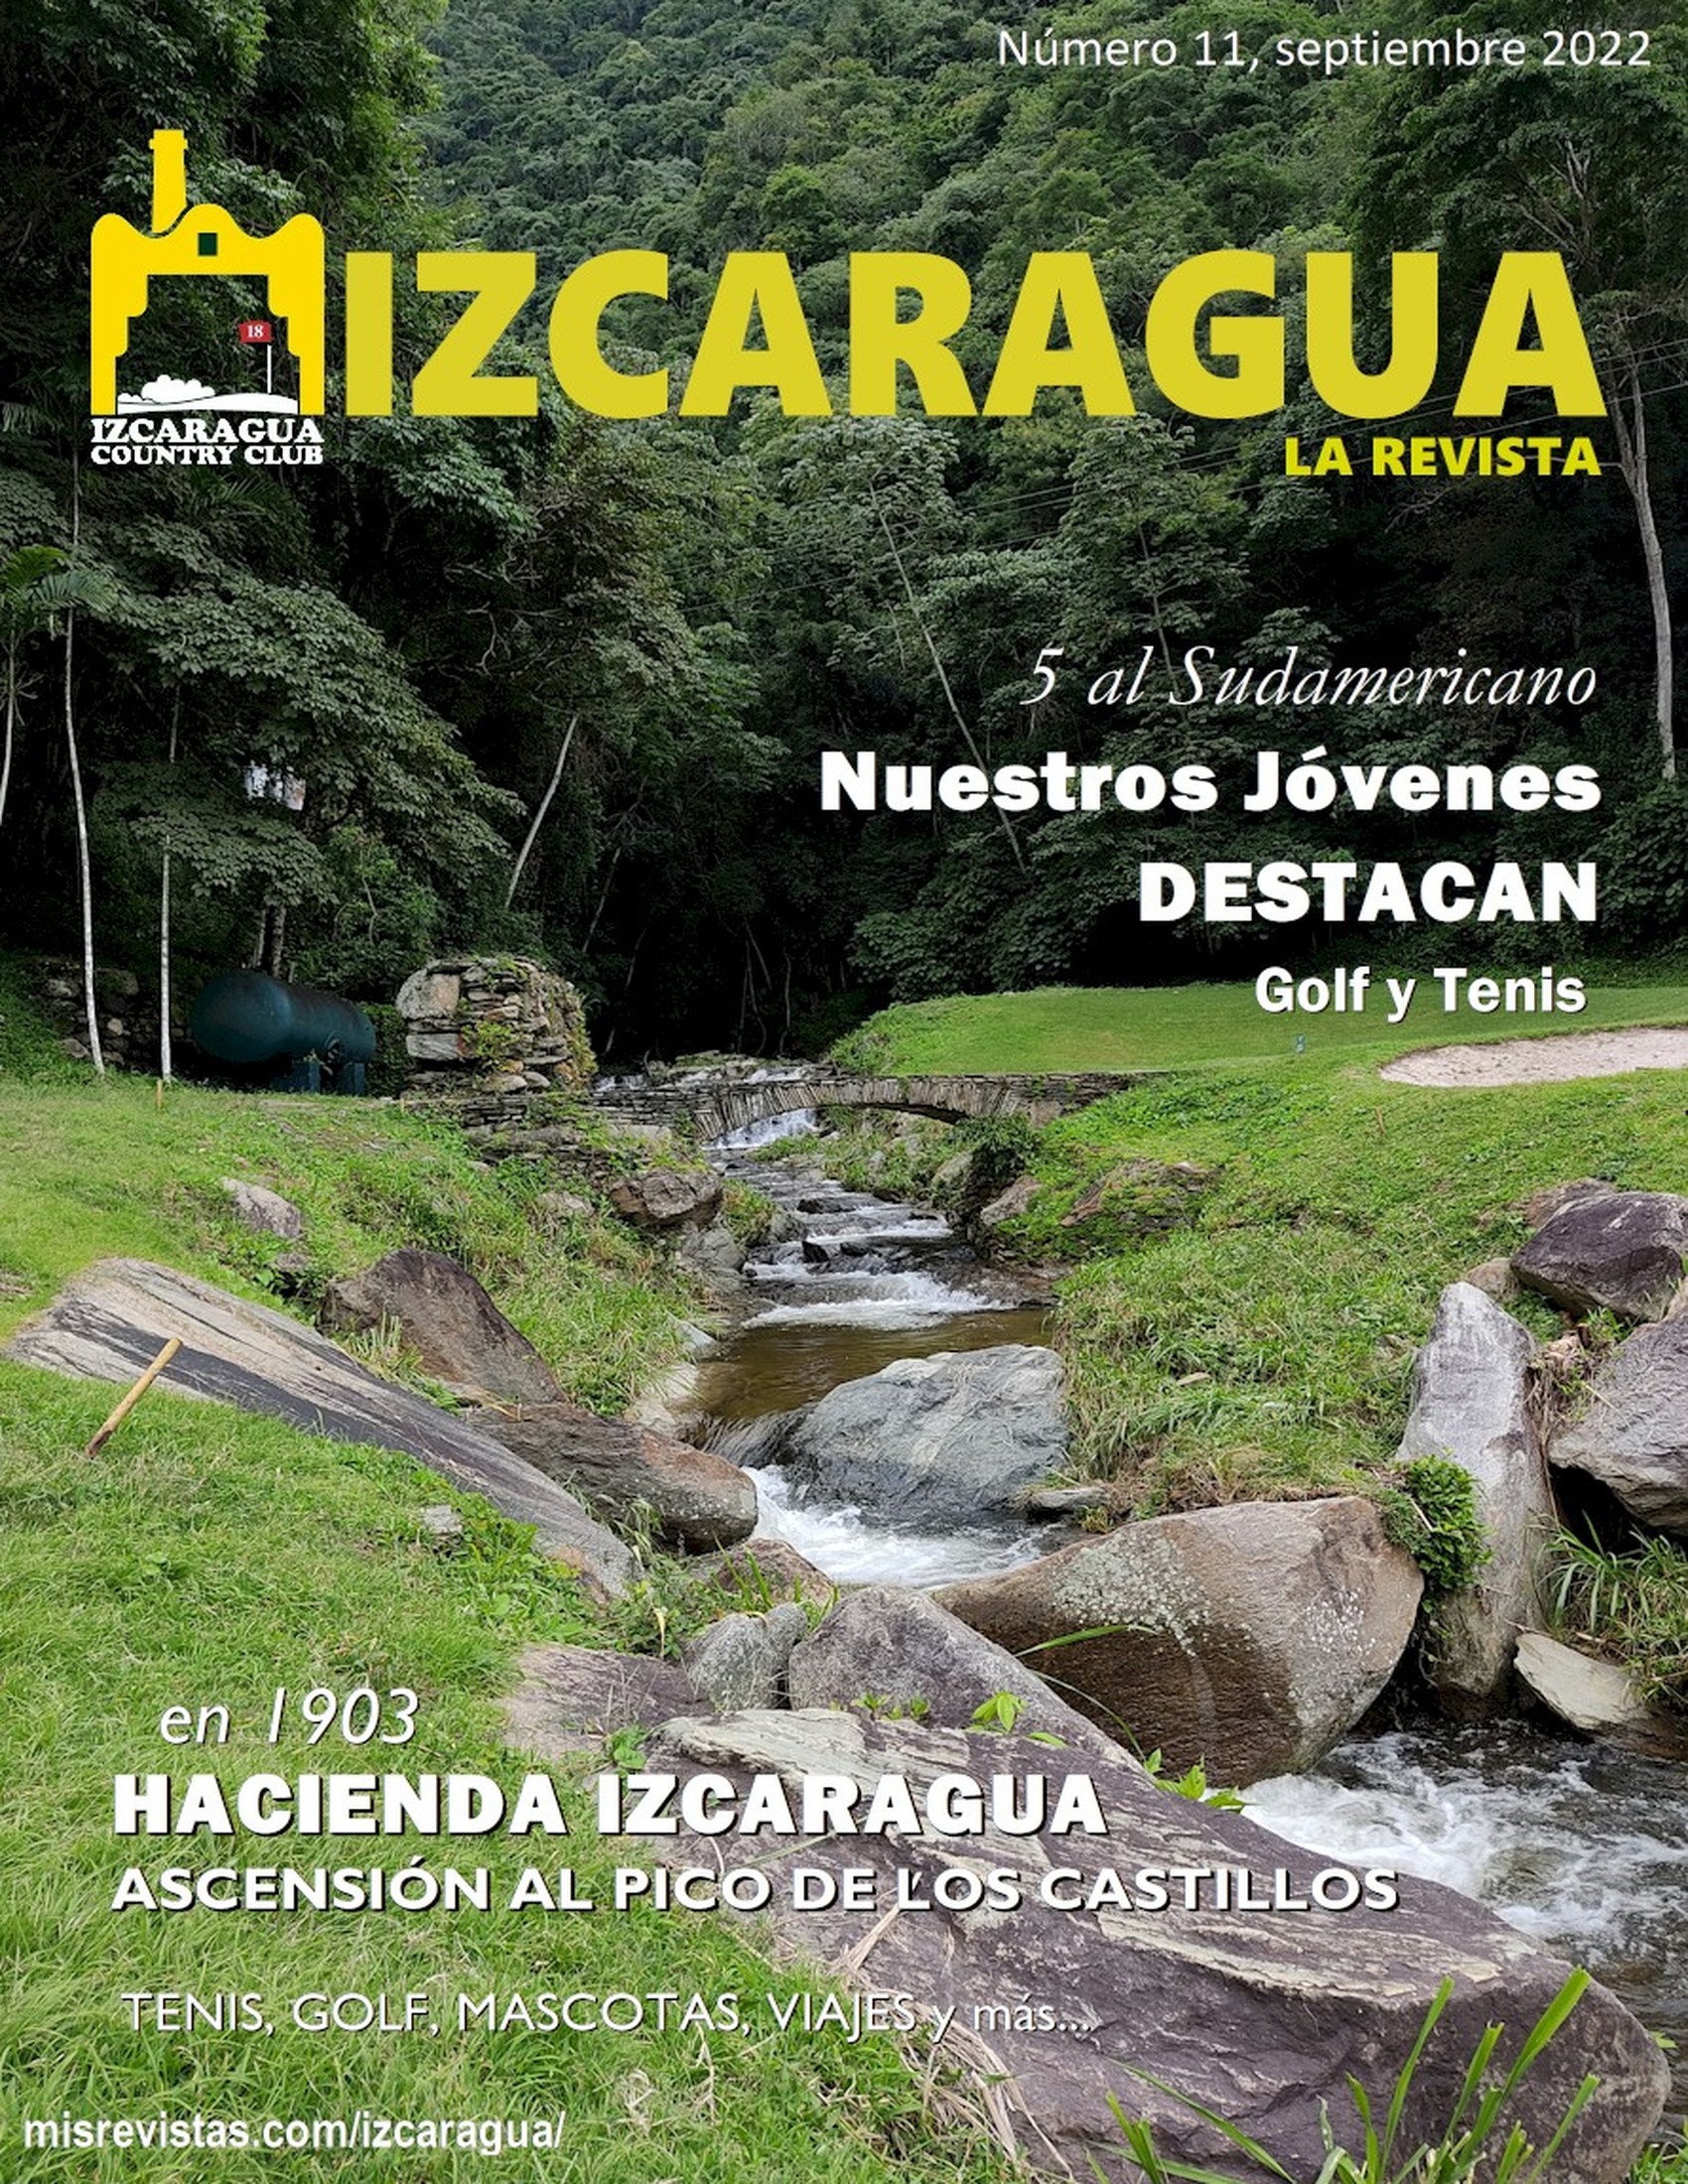 IZC Izcaragua Country Club Portada 2022 Septiembre